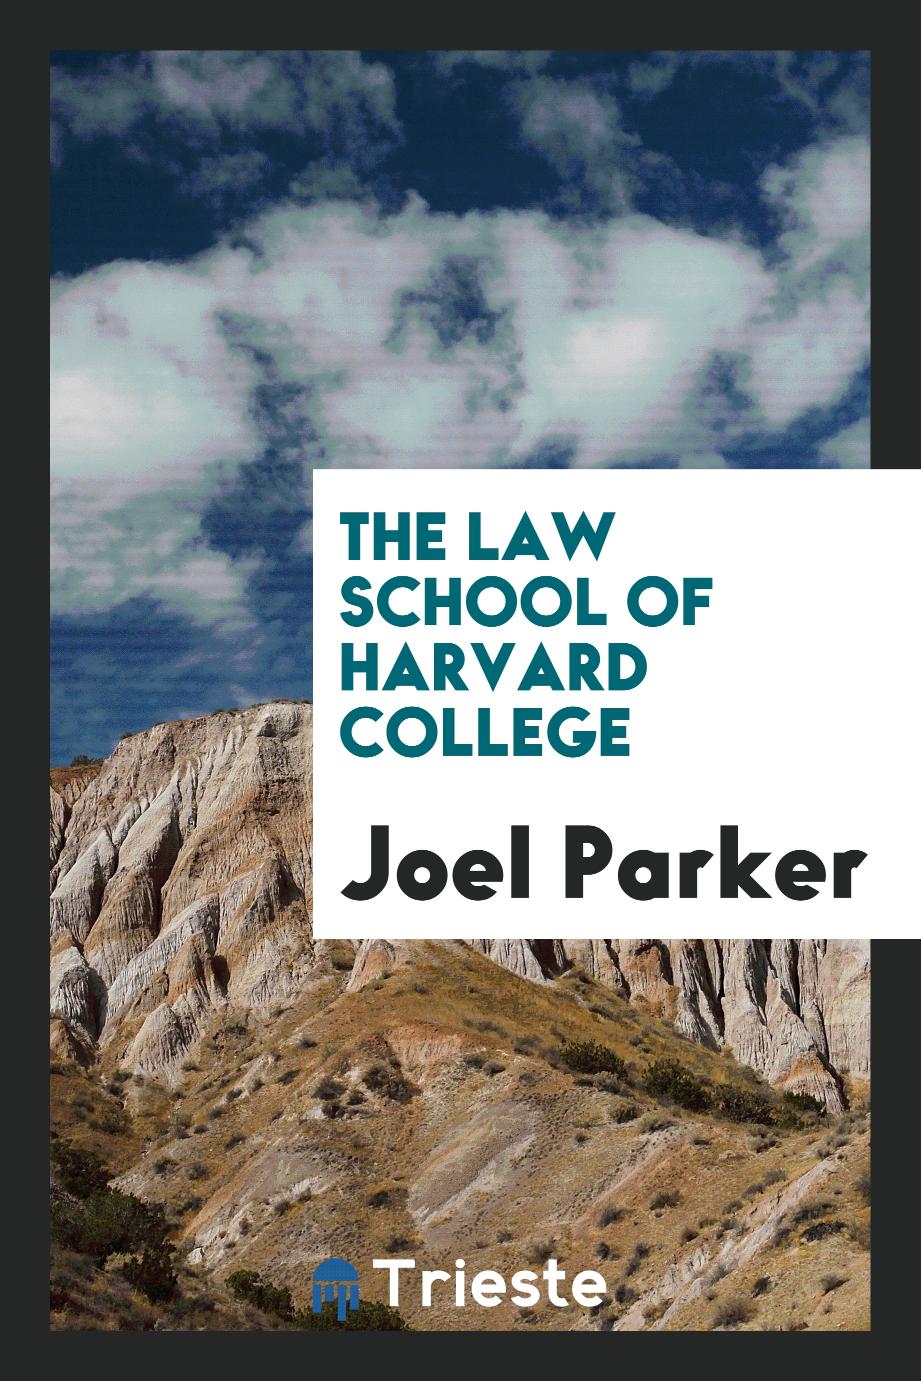 The Law School of Harvard College